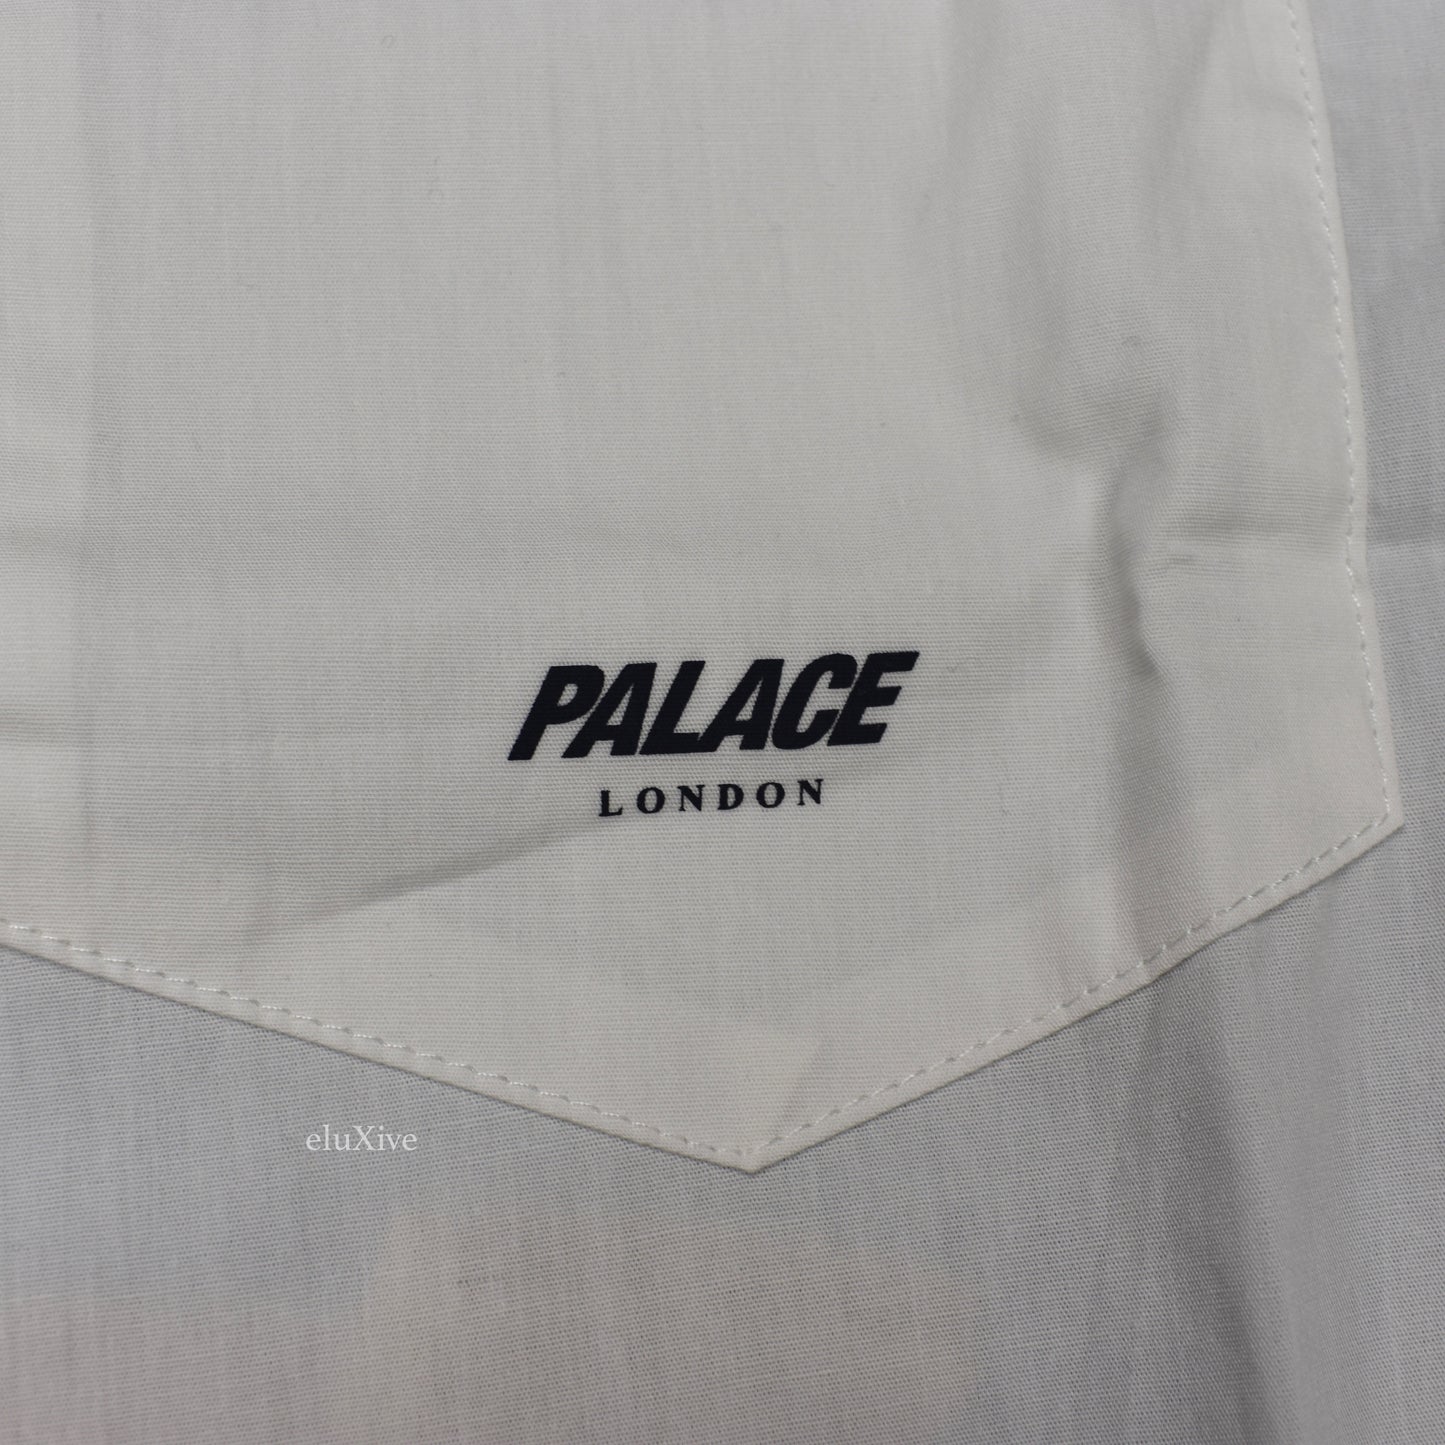 Palace - Persailles Artwork Print Shirt (White)